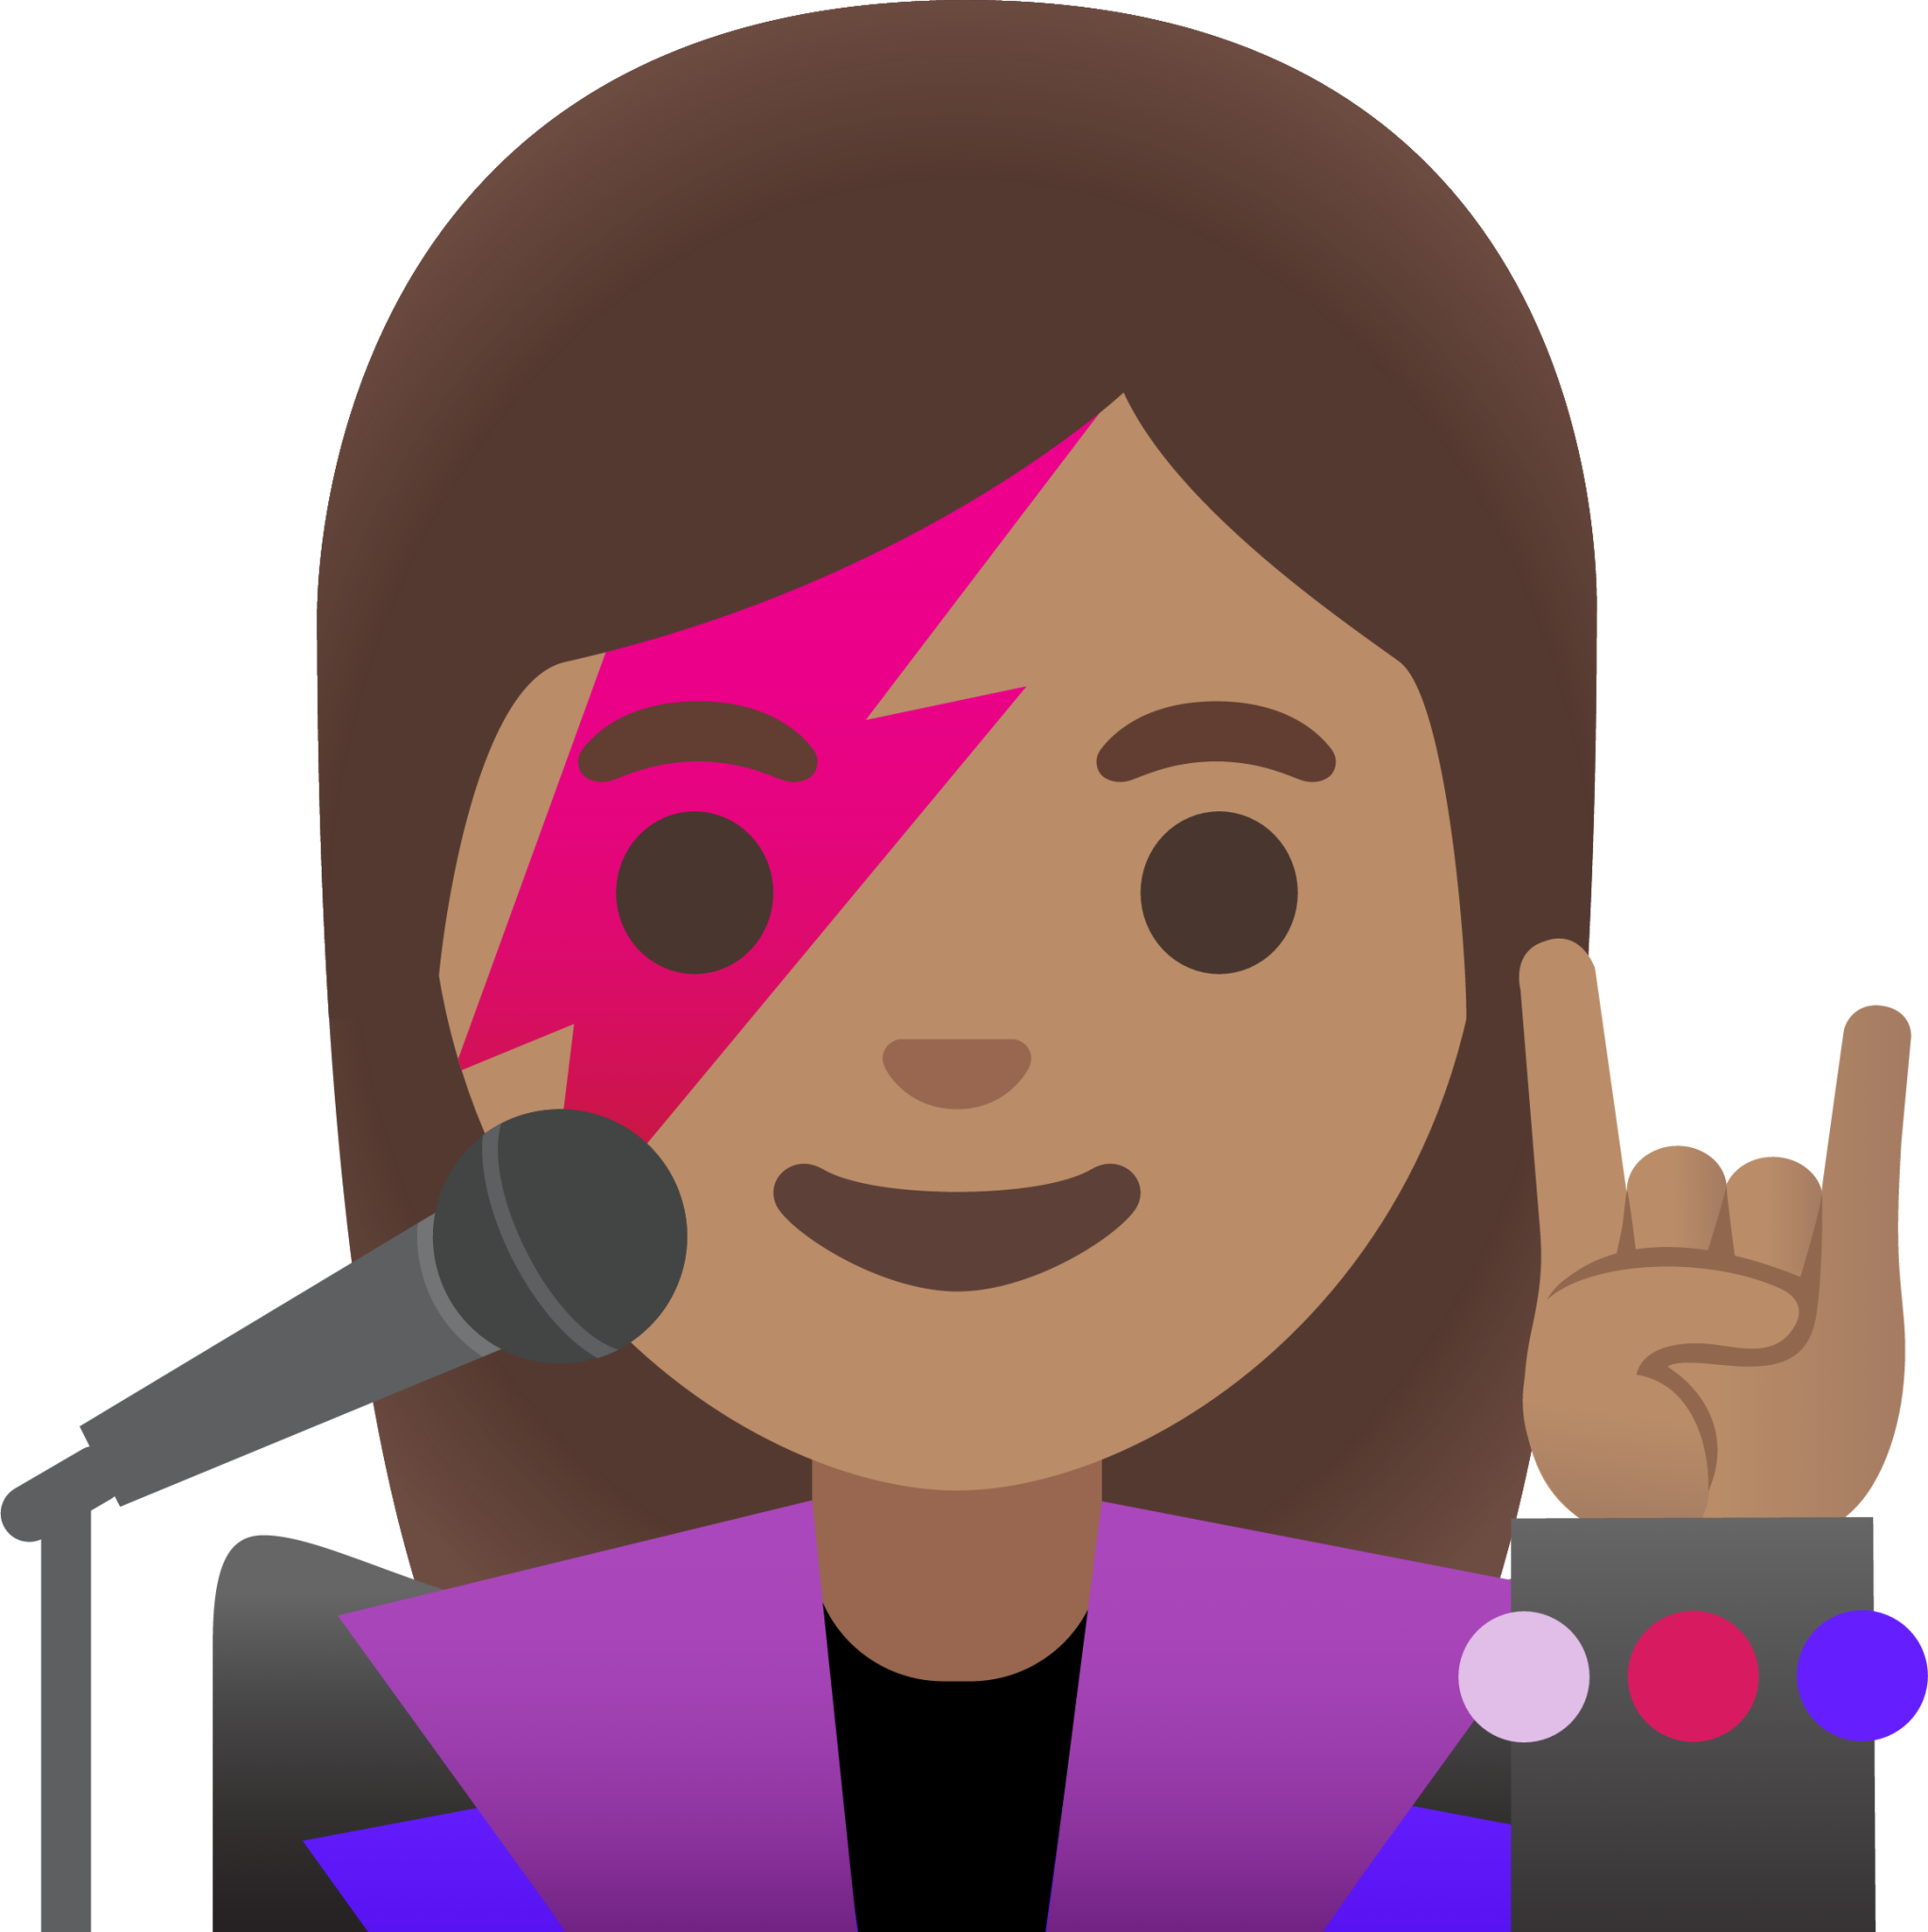 woman singer: medium skin tone emoji